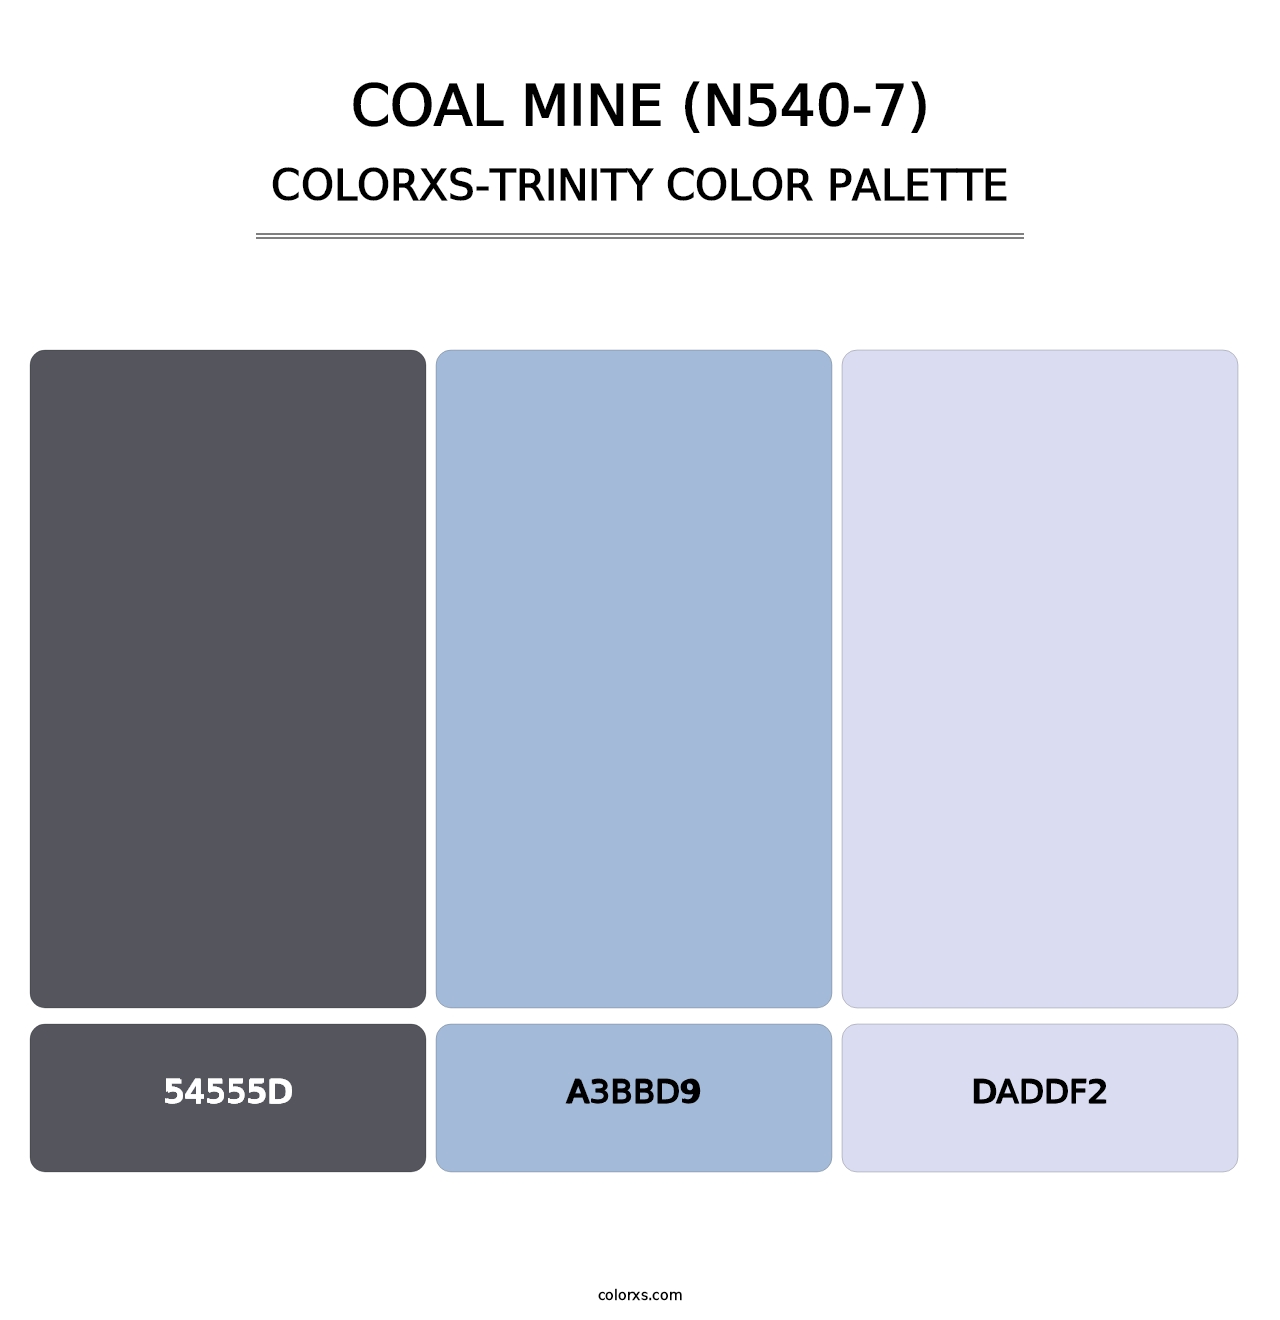 Coal Mine (N540-7) - Colorxs Trinity Palette